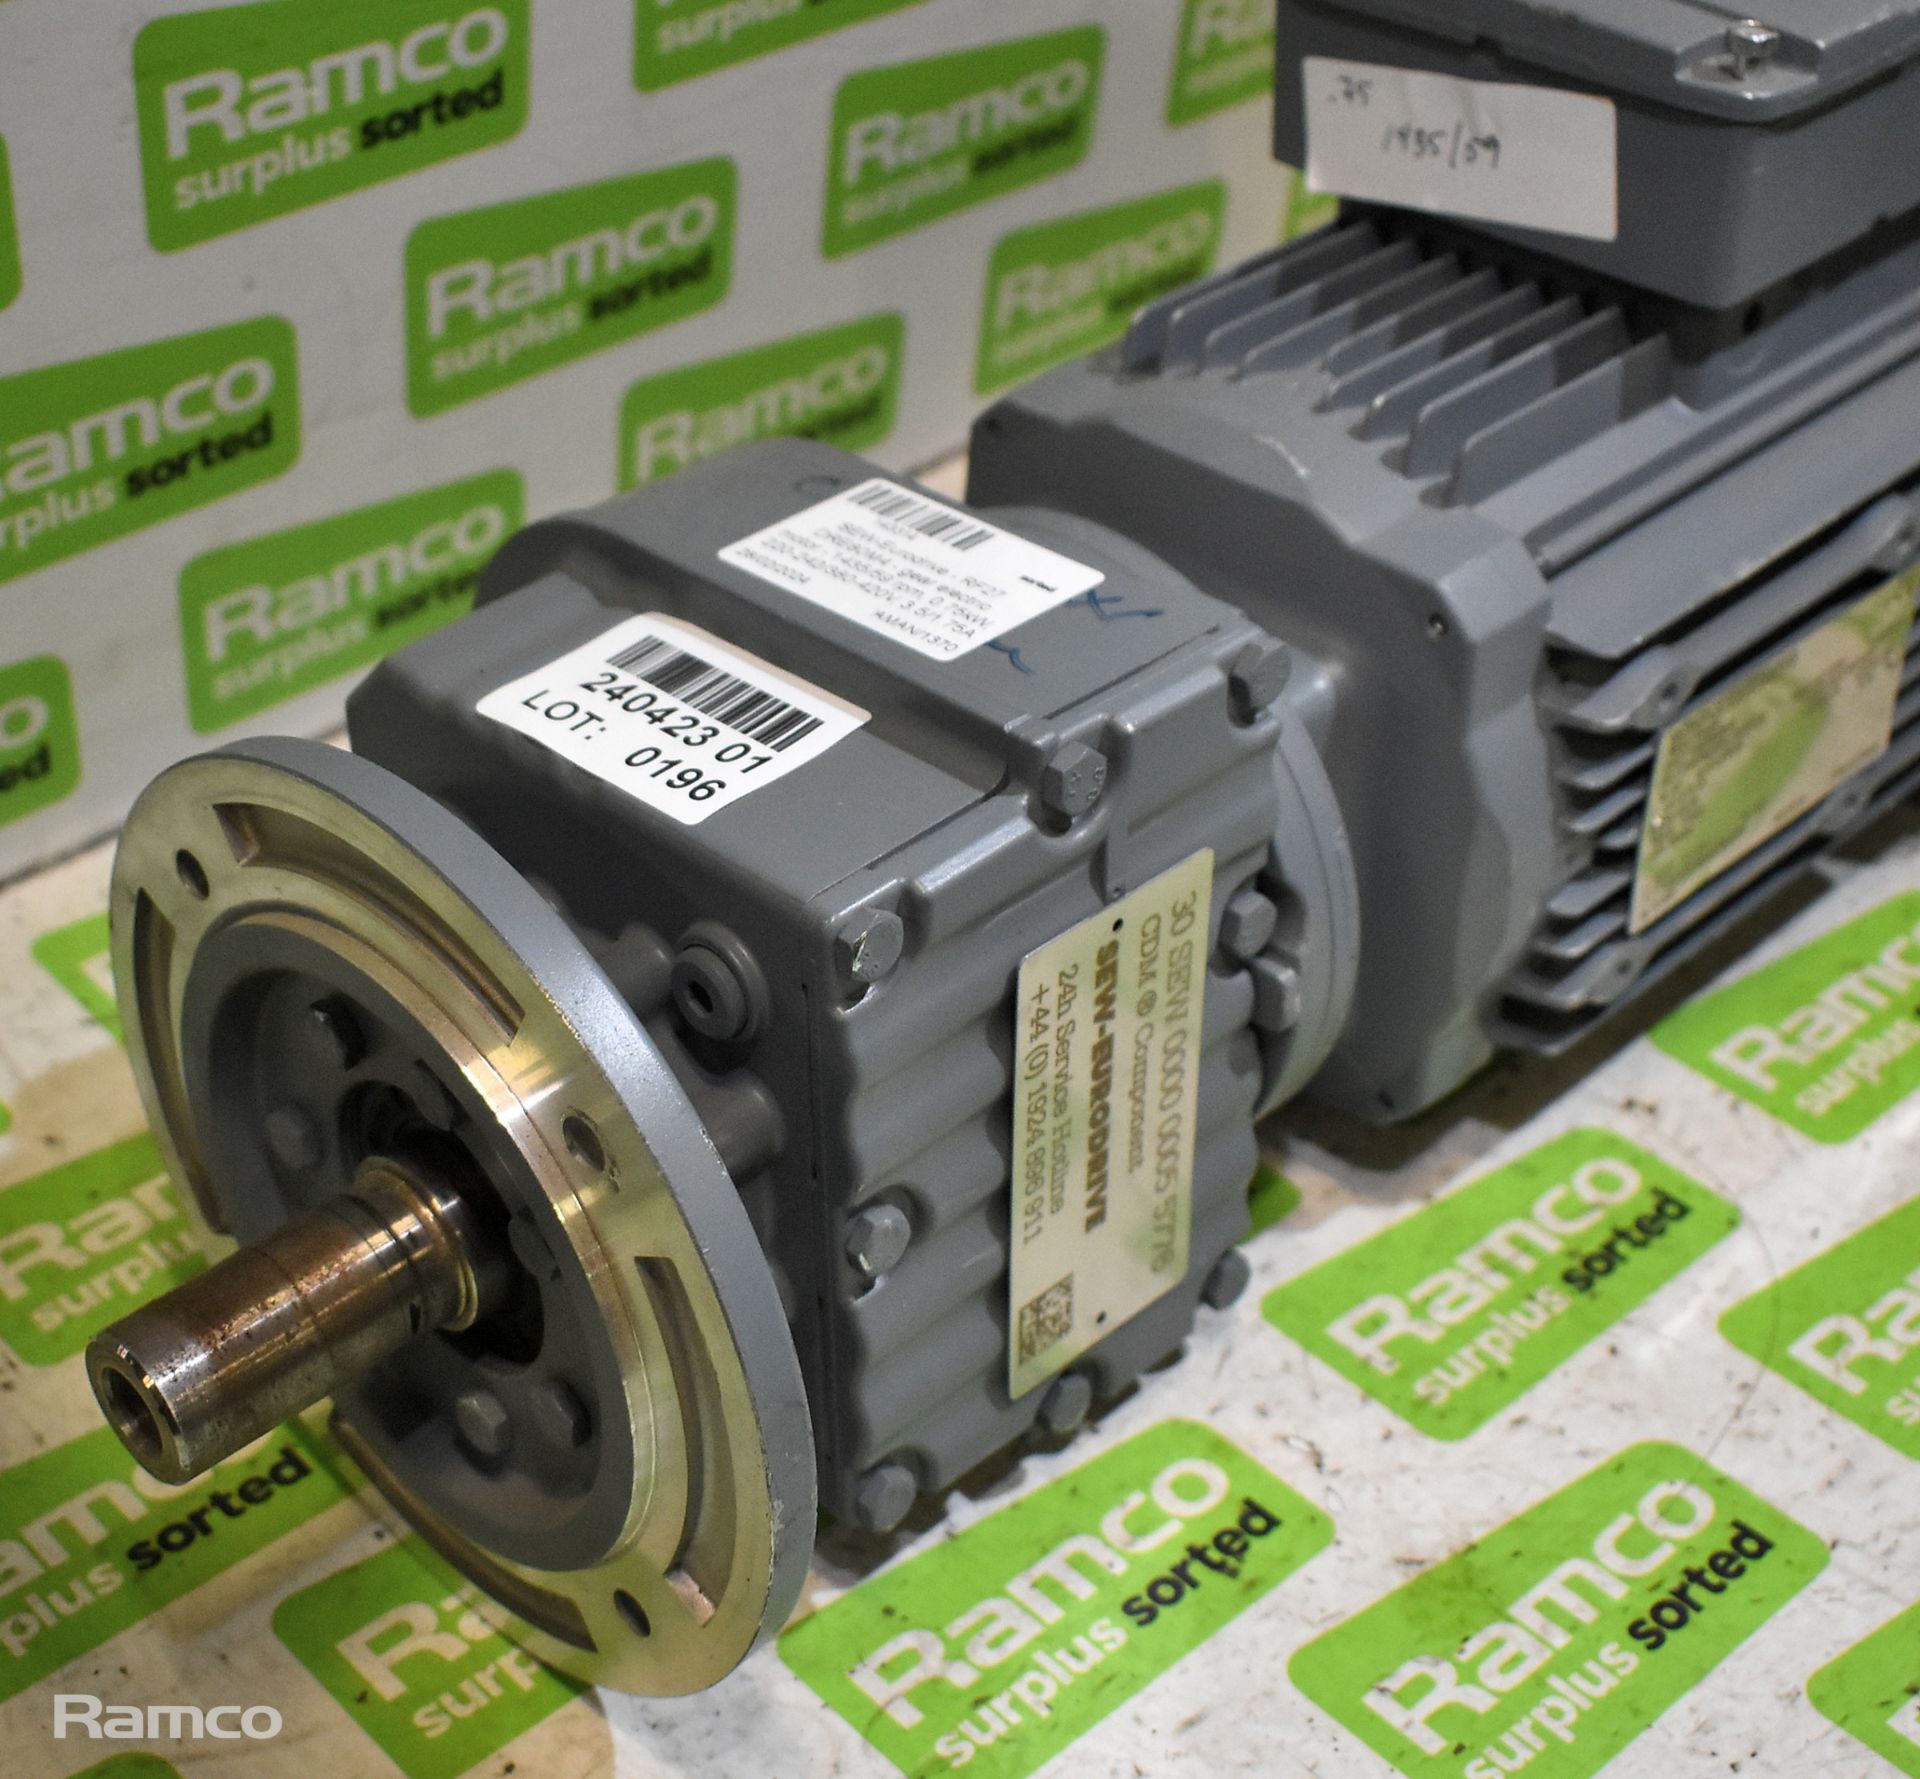 SEW-Eurodrive - RF27 DRE80M4 - gear electric motor - 1435/59 rpm - 0.75kW - 220-242/380-420V - Image 4 of 5